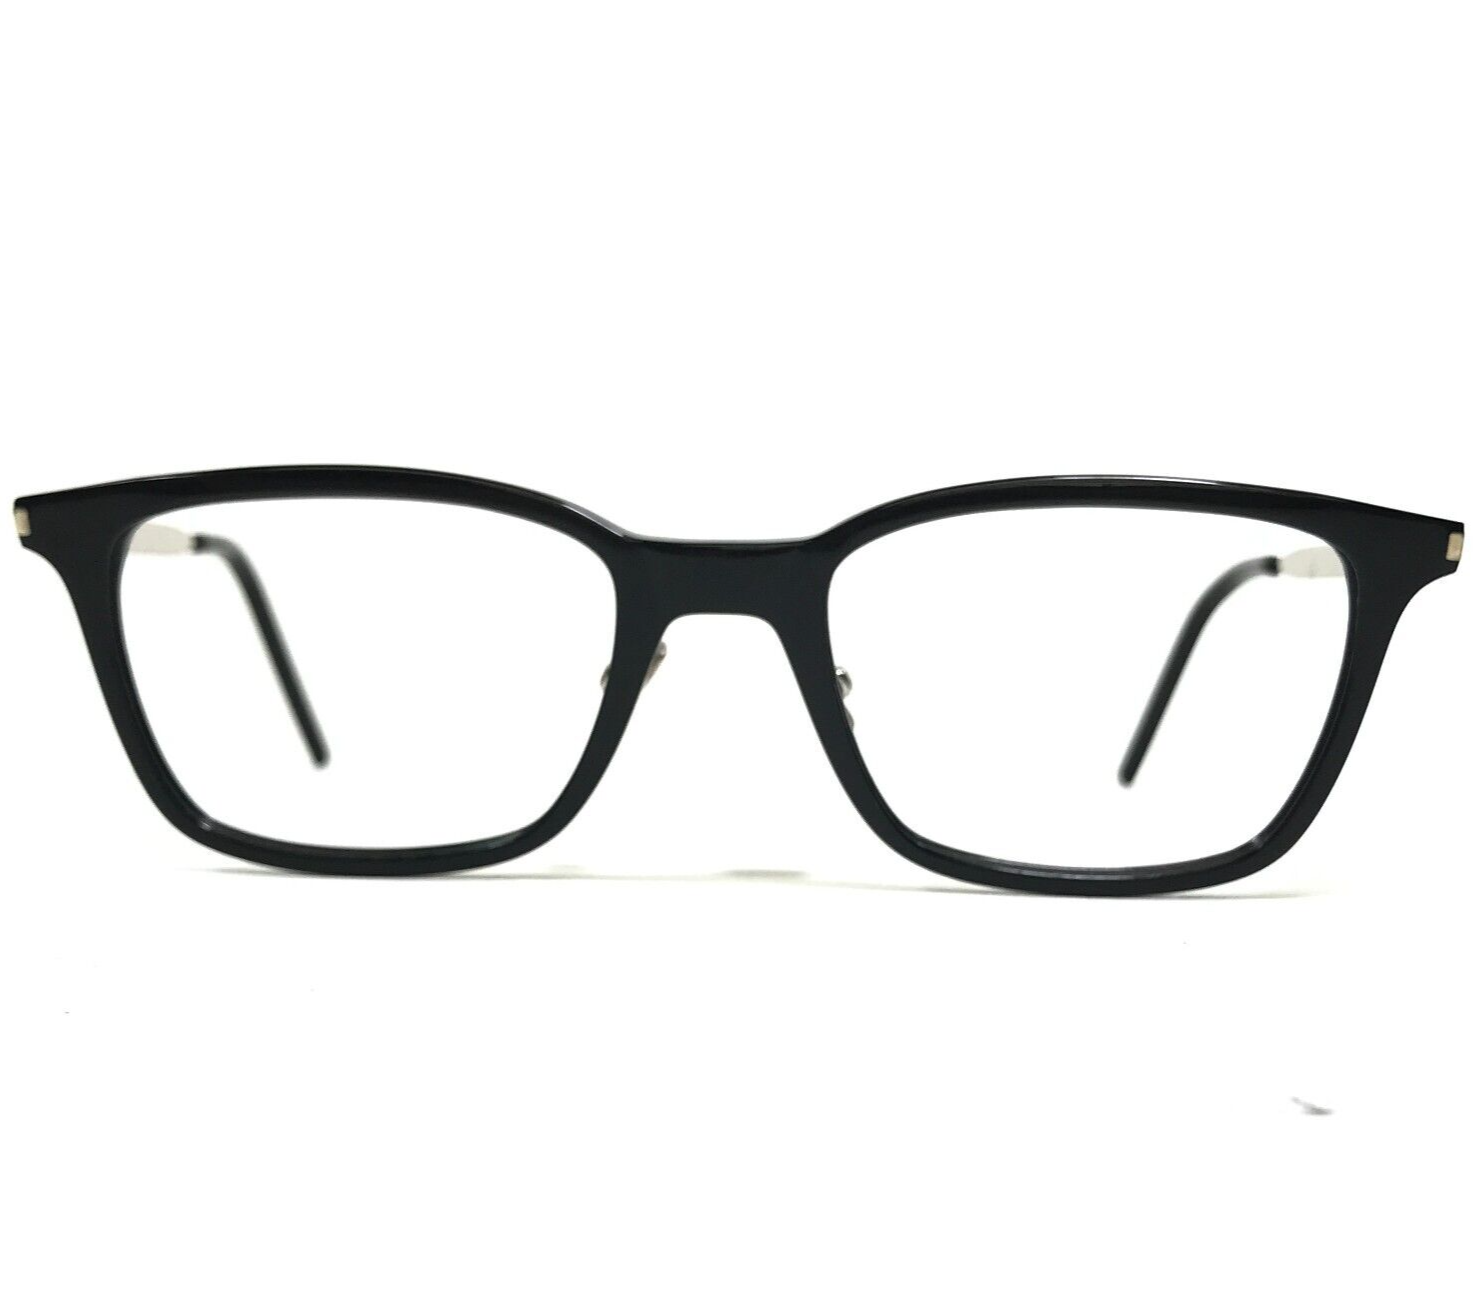 Saint Laurent Eyeglasses Frames SL262 002 Shiny Black Silver 51-20-150 - $130.28